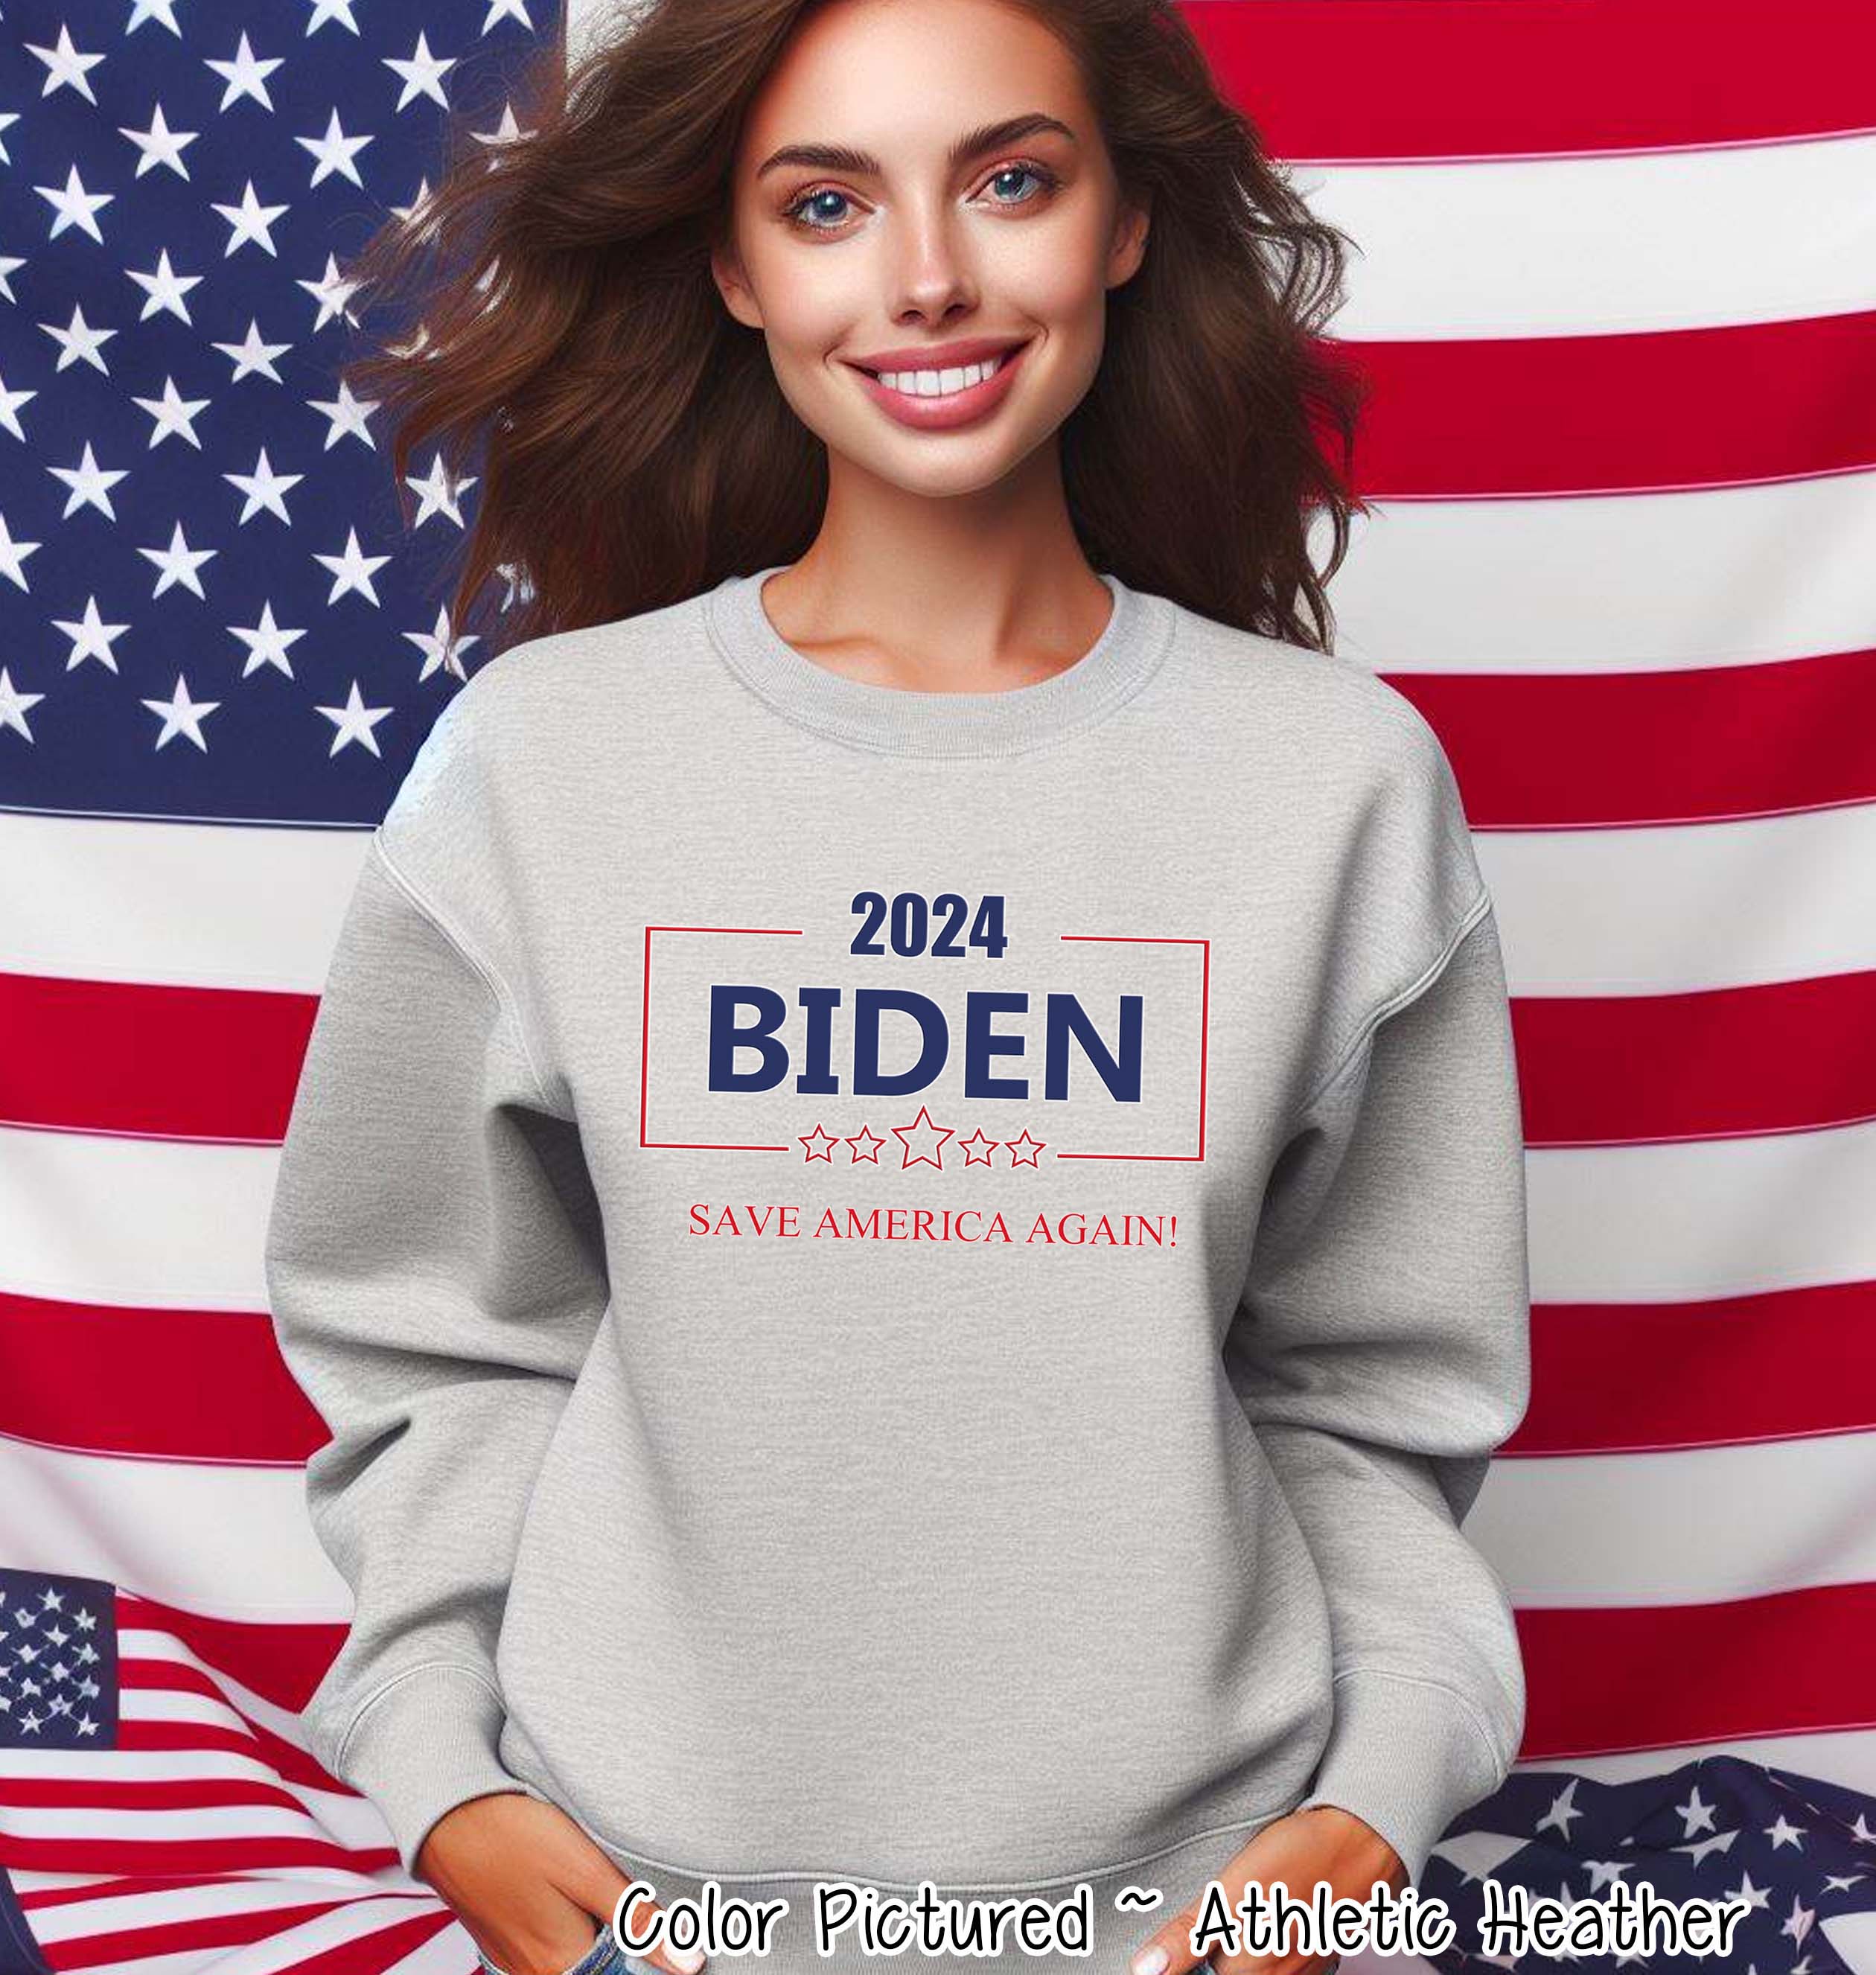 Biden 2024 Political Tee or Sweatshirt